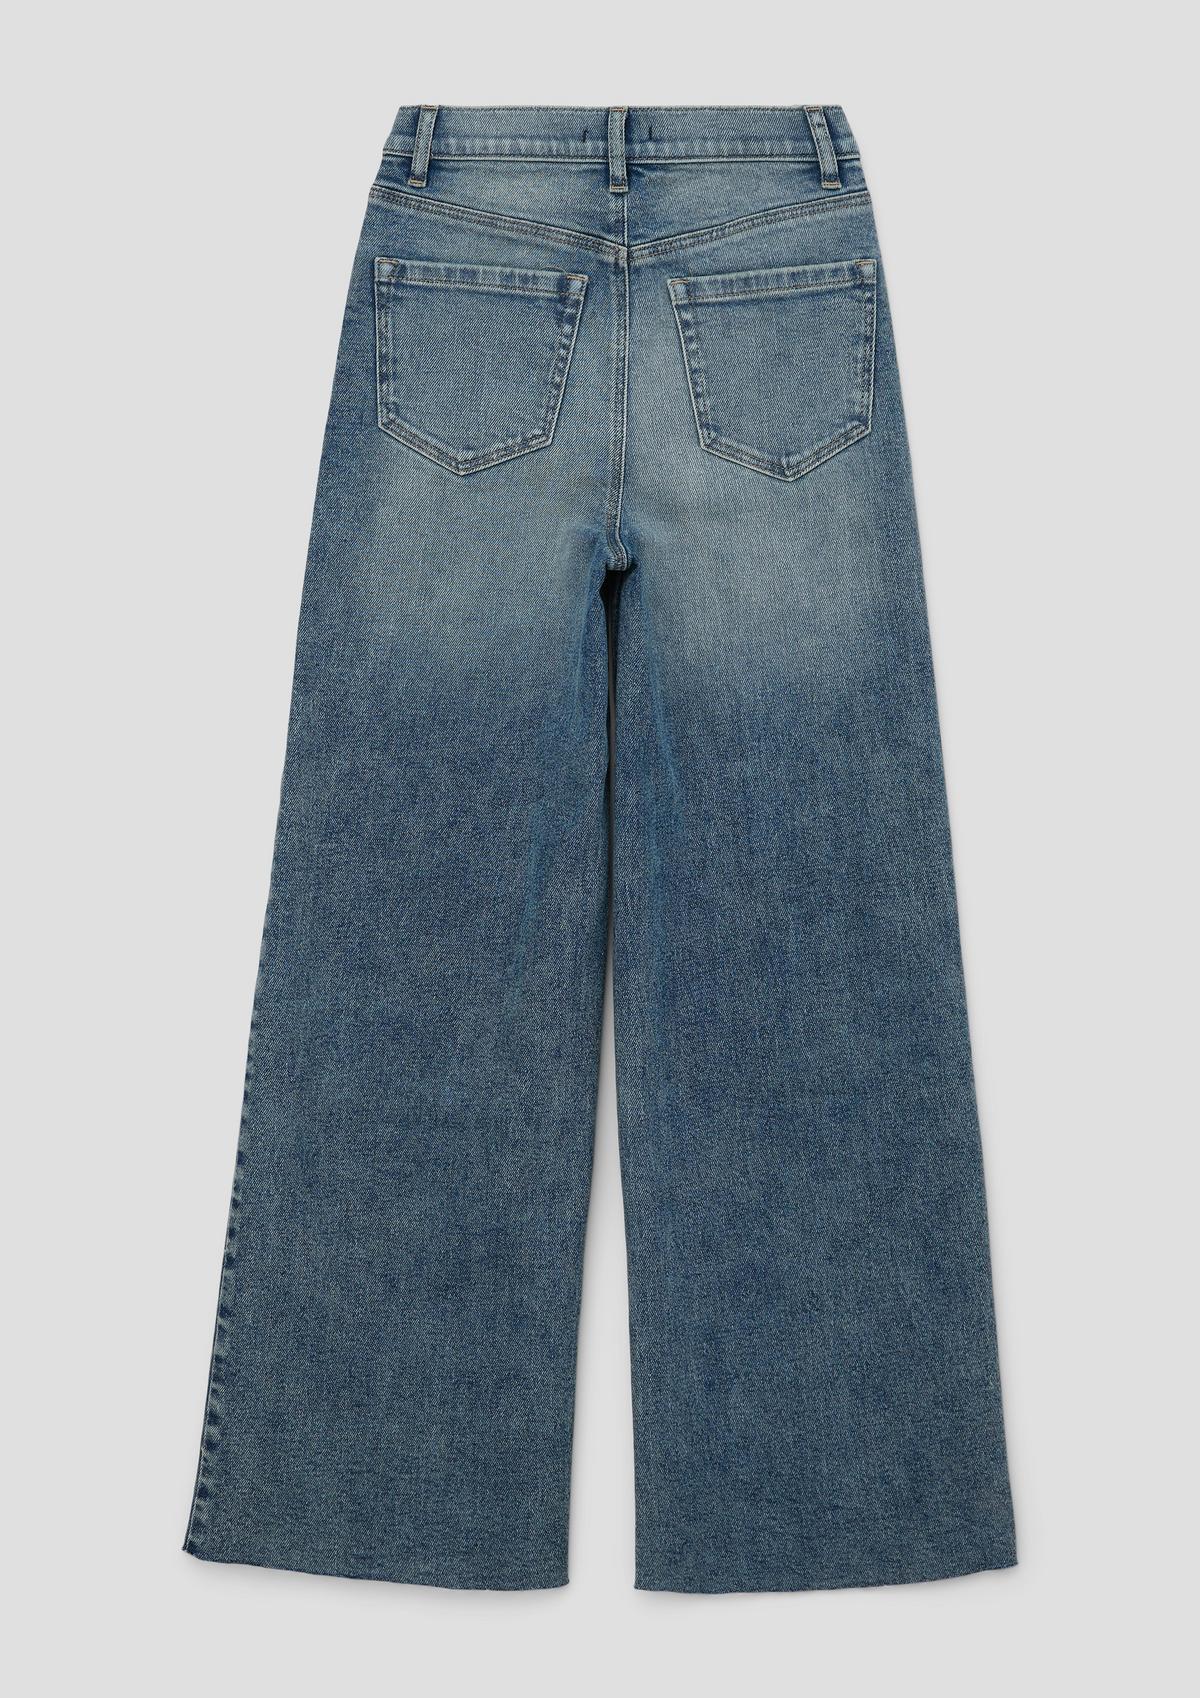 s.Oliver Jeans / Regular Fit / Super High Rise / Wide Leg / asymmetrischem Bund